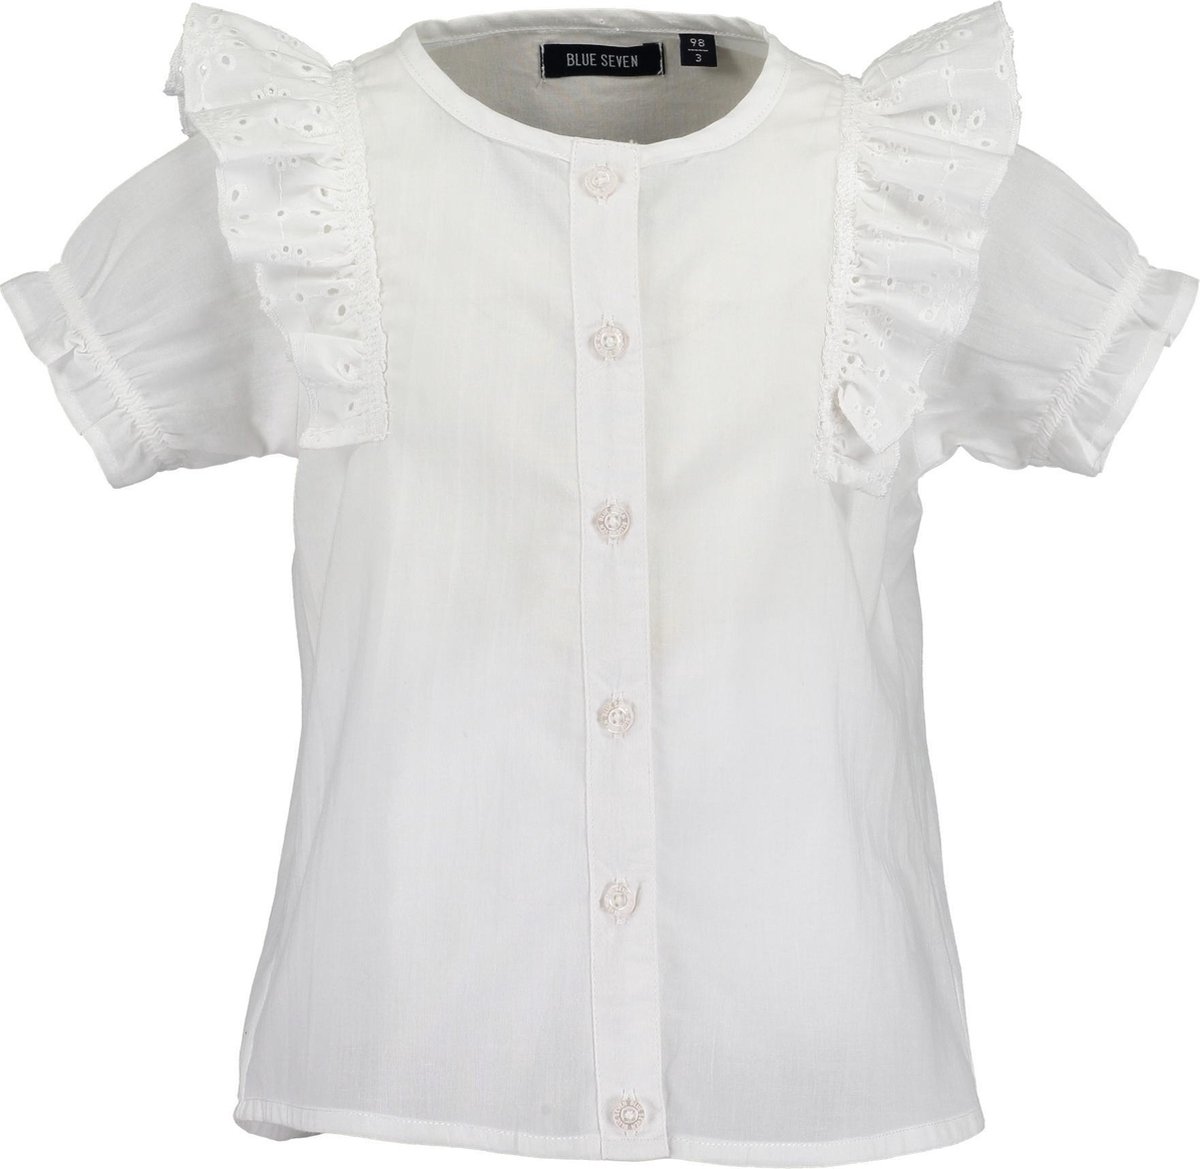 draagbaar Shuraba Continent Blue Seven - Meisjes - Witte blouse - Maat 122 | bol.com